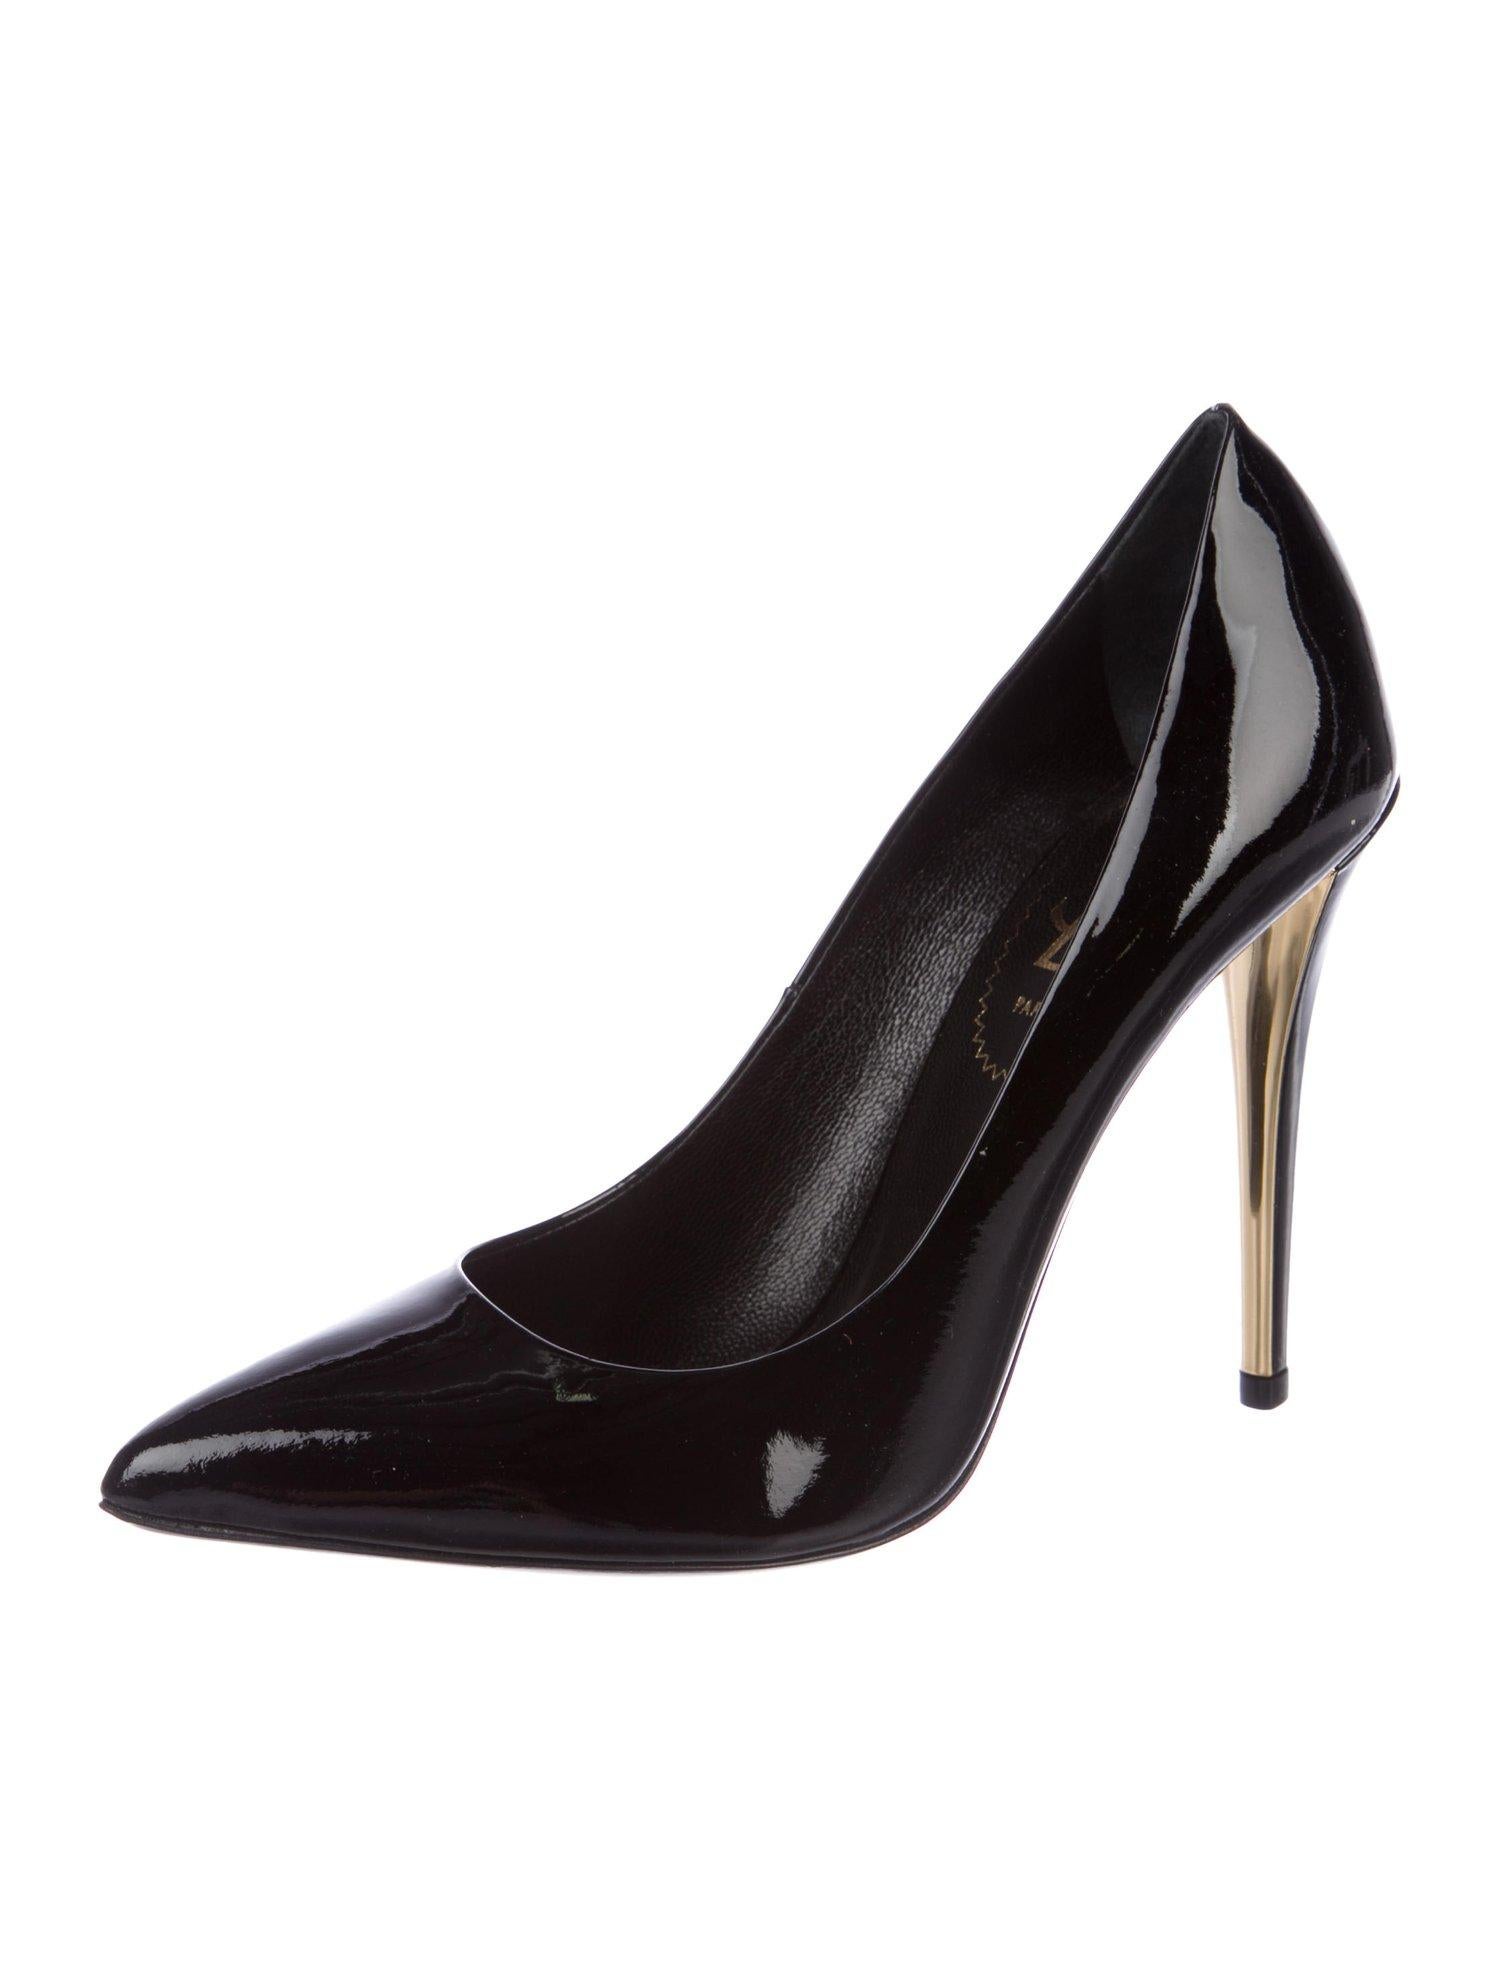 Women's Yves Saint Laurent YSL NEW Black Patent Leather Gold Heel Evening Pumps Heels